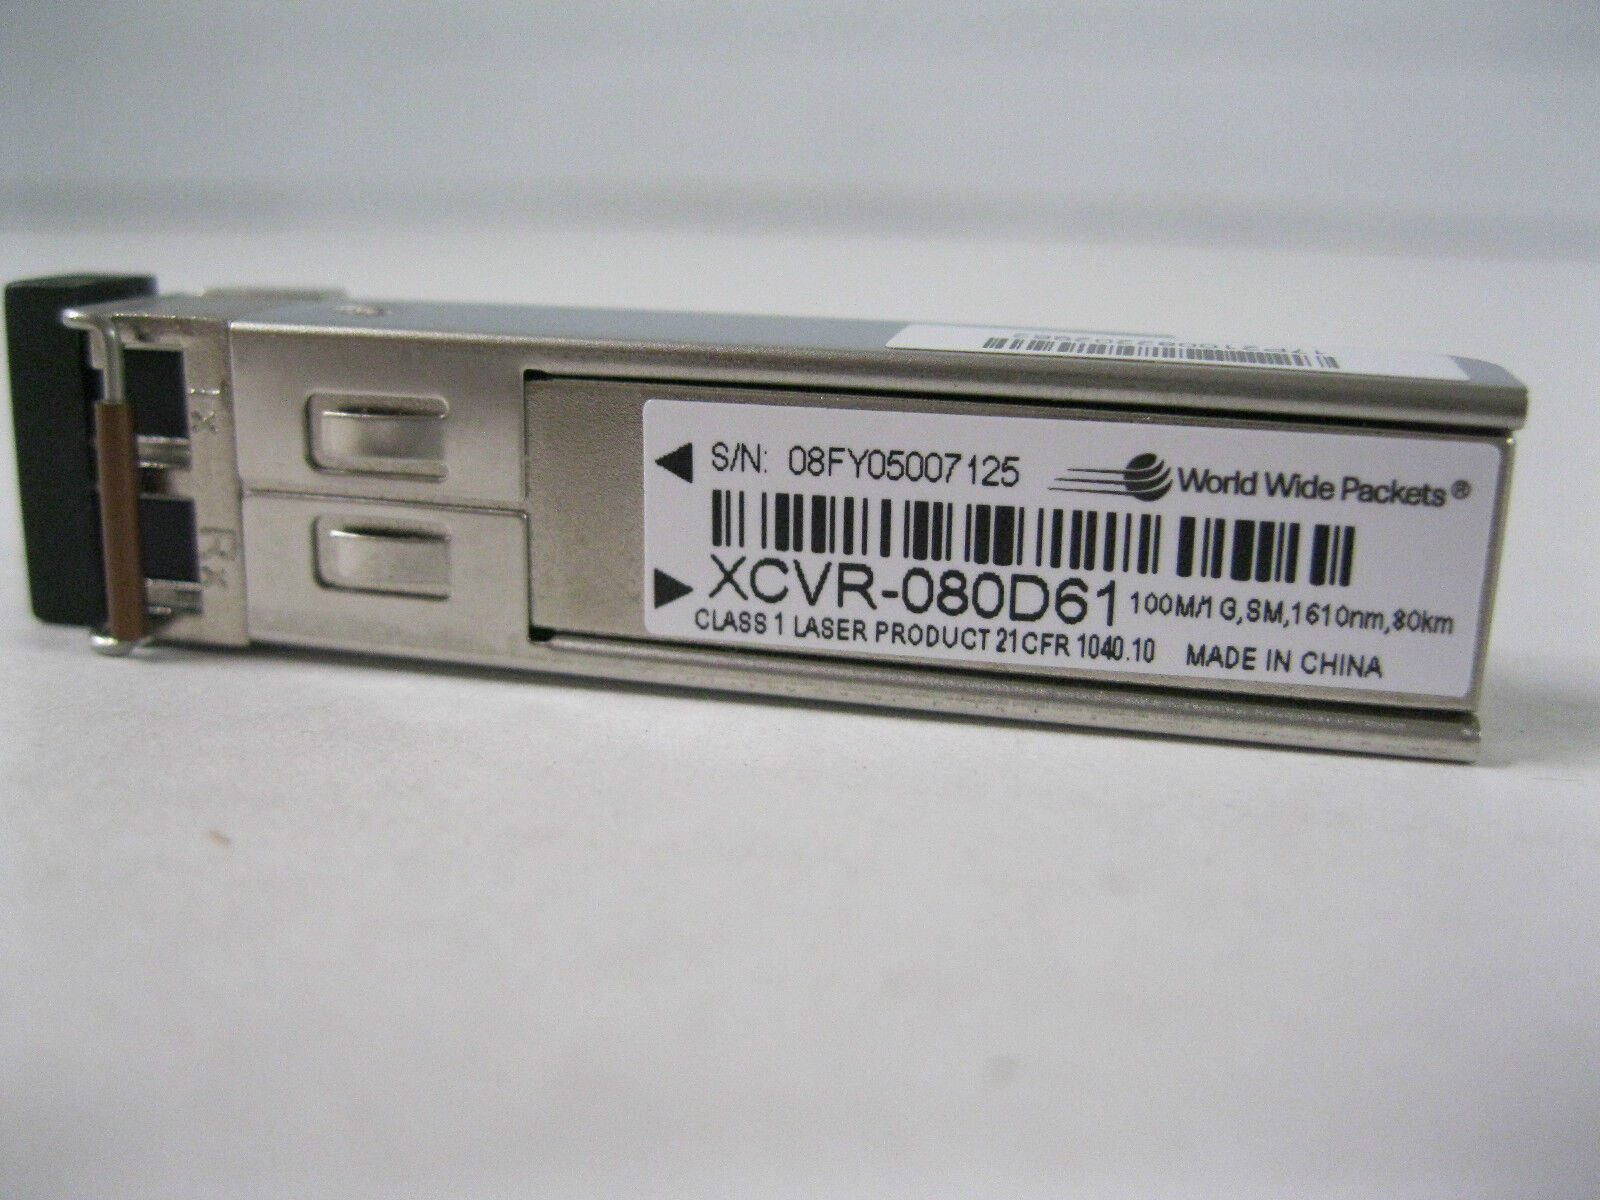 New XCVR-080D61 World Wide Packets 100M/1G SM 1610nm 80km SFP Ciena Transceiver 